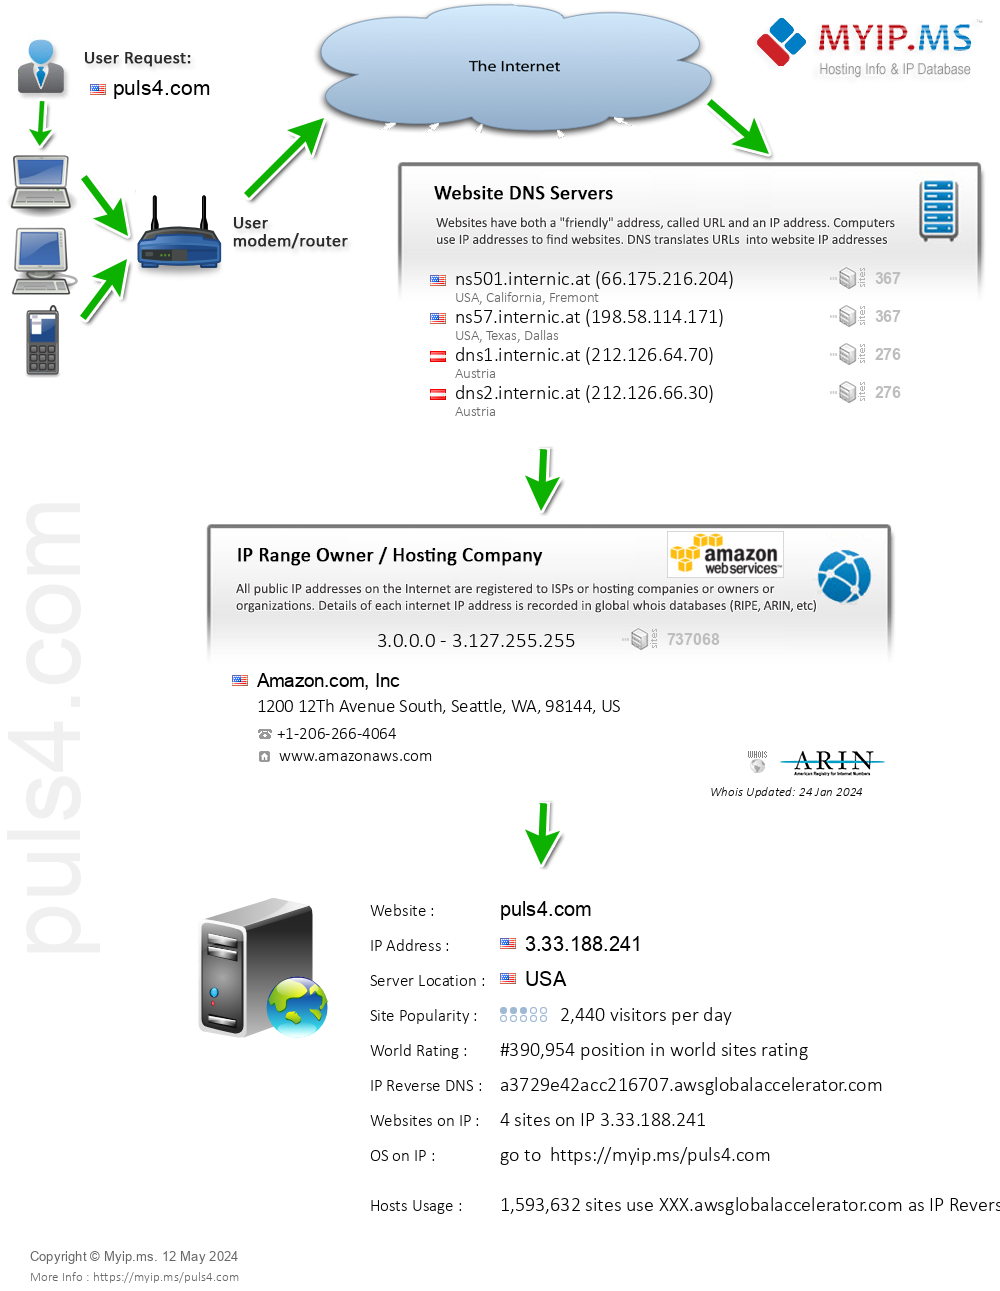 Puls4.com - Website Hosting Visual IP Diagram